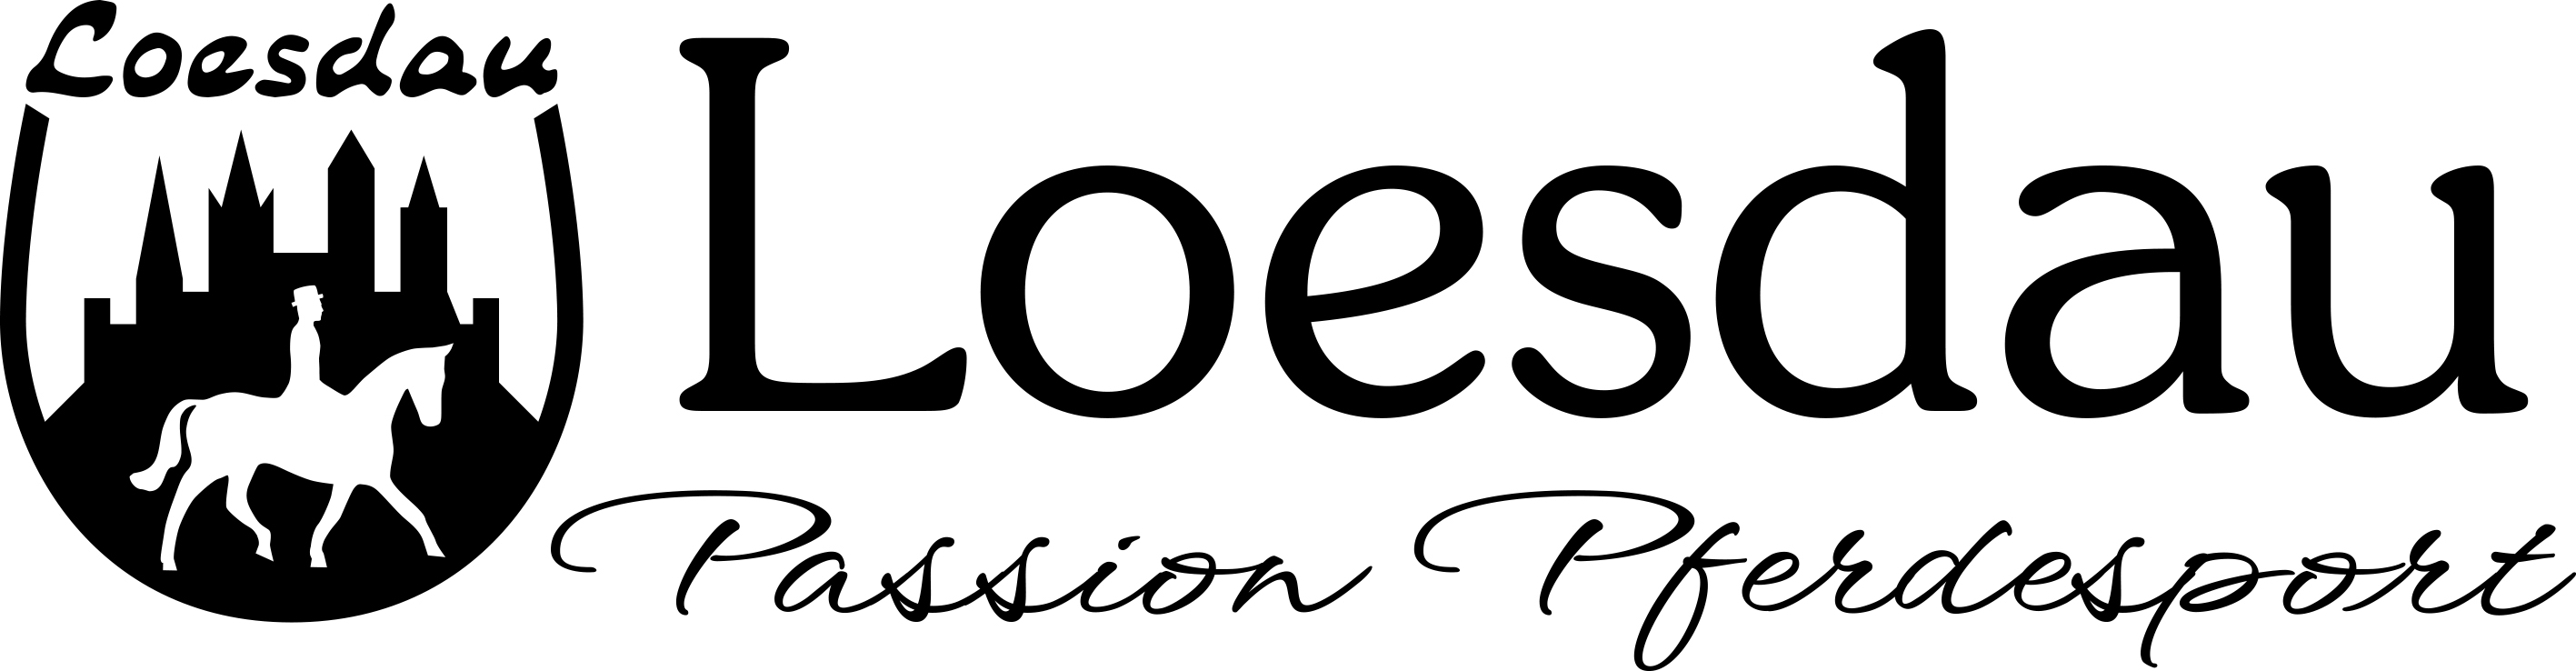 loesdau passion pferdesport logo 1